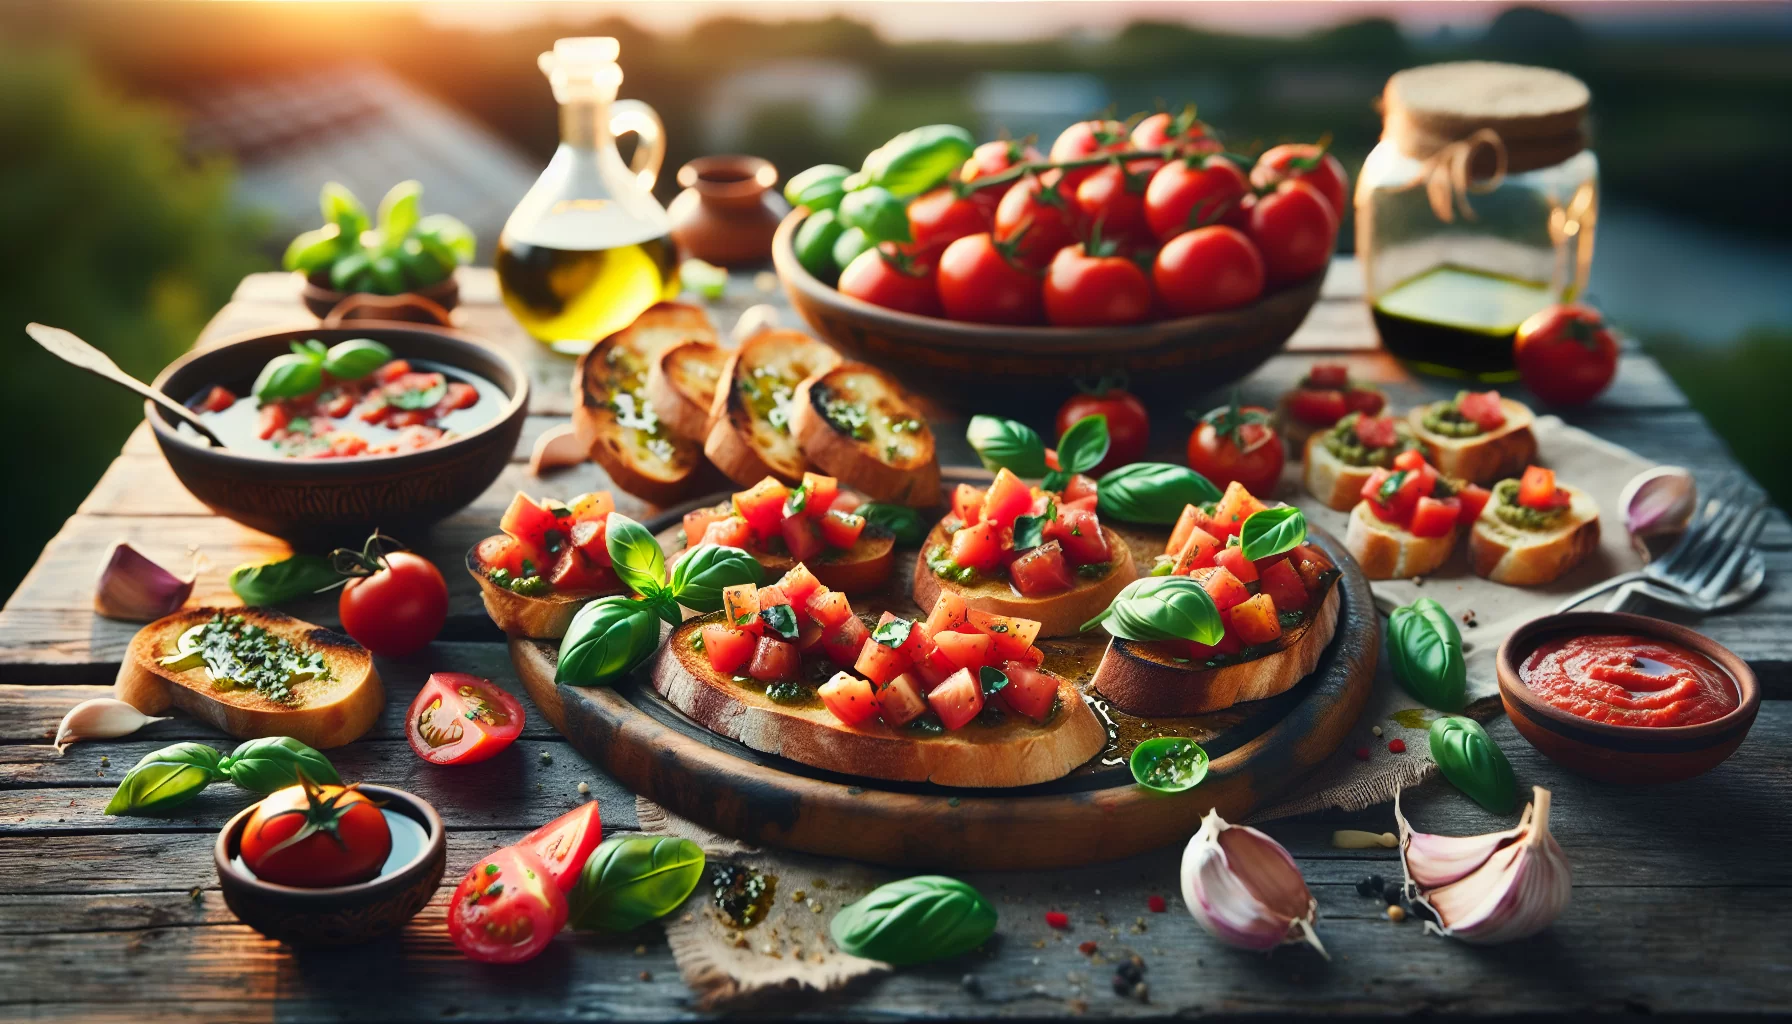 Exploring the simplicity and flavor of tomato bruschetta and crostini